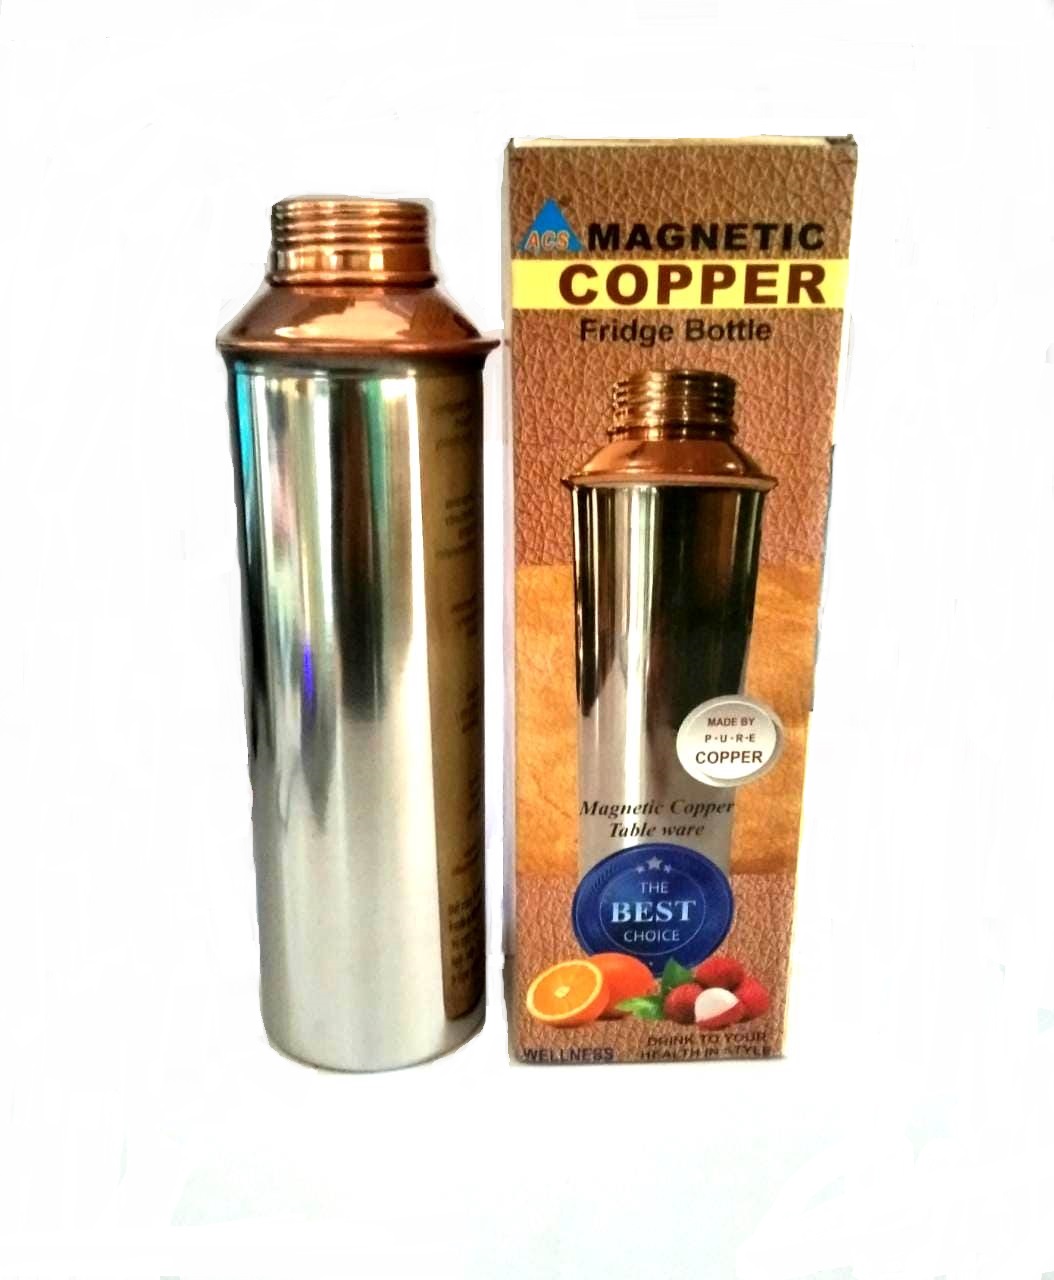 ACS Magnetic Copper Bottle -Table Ware  - 484 